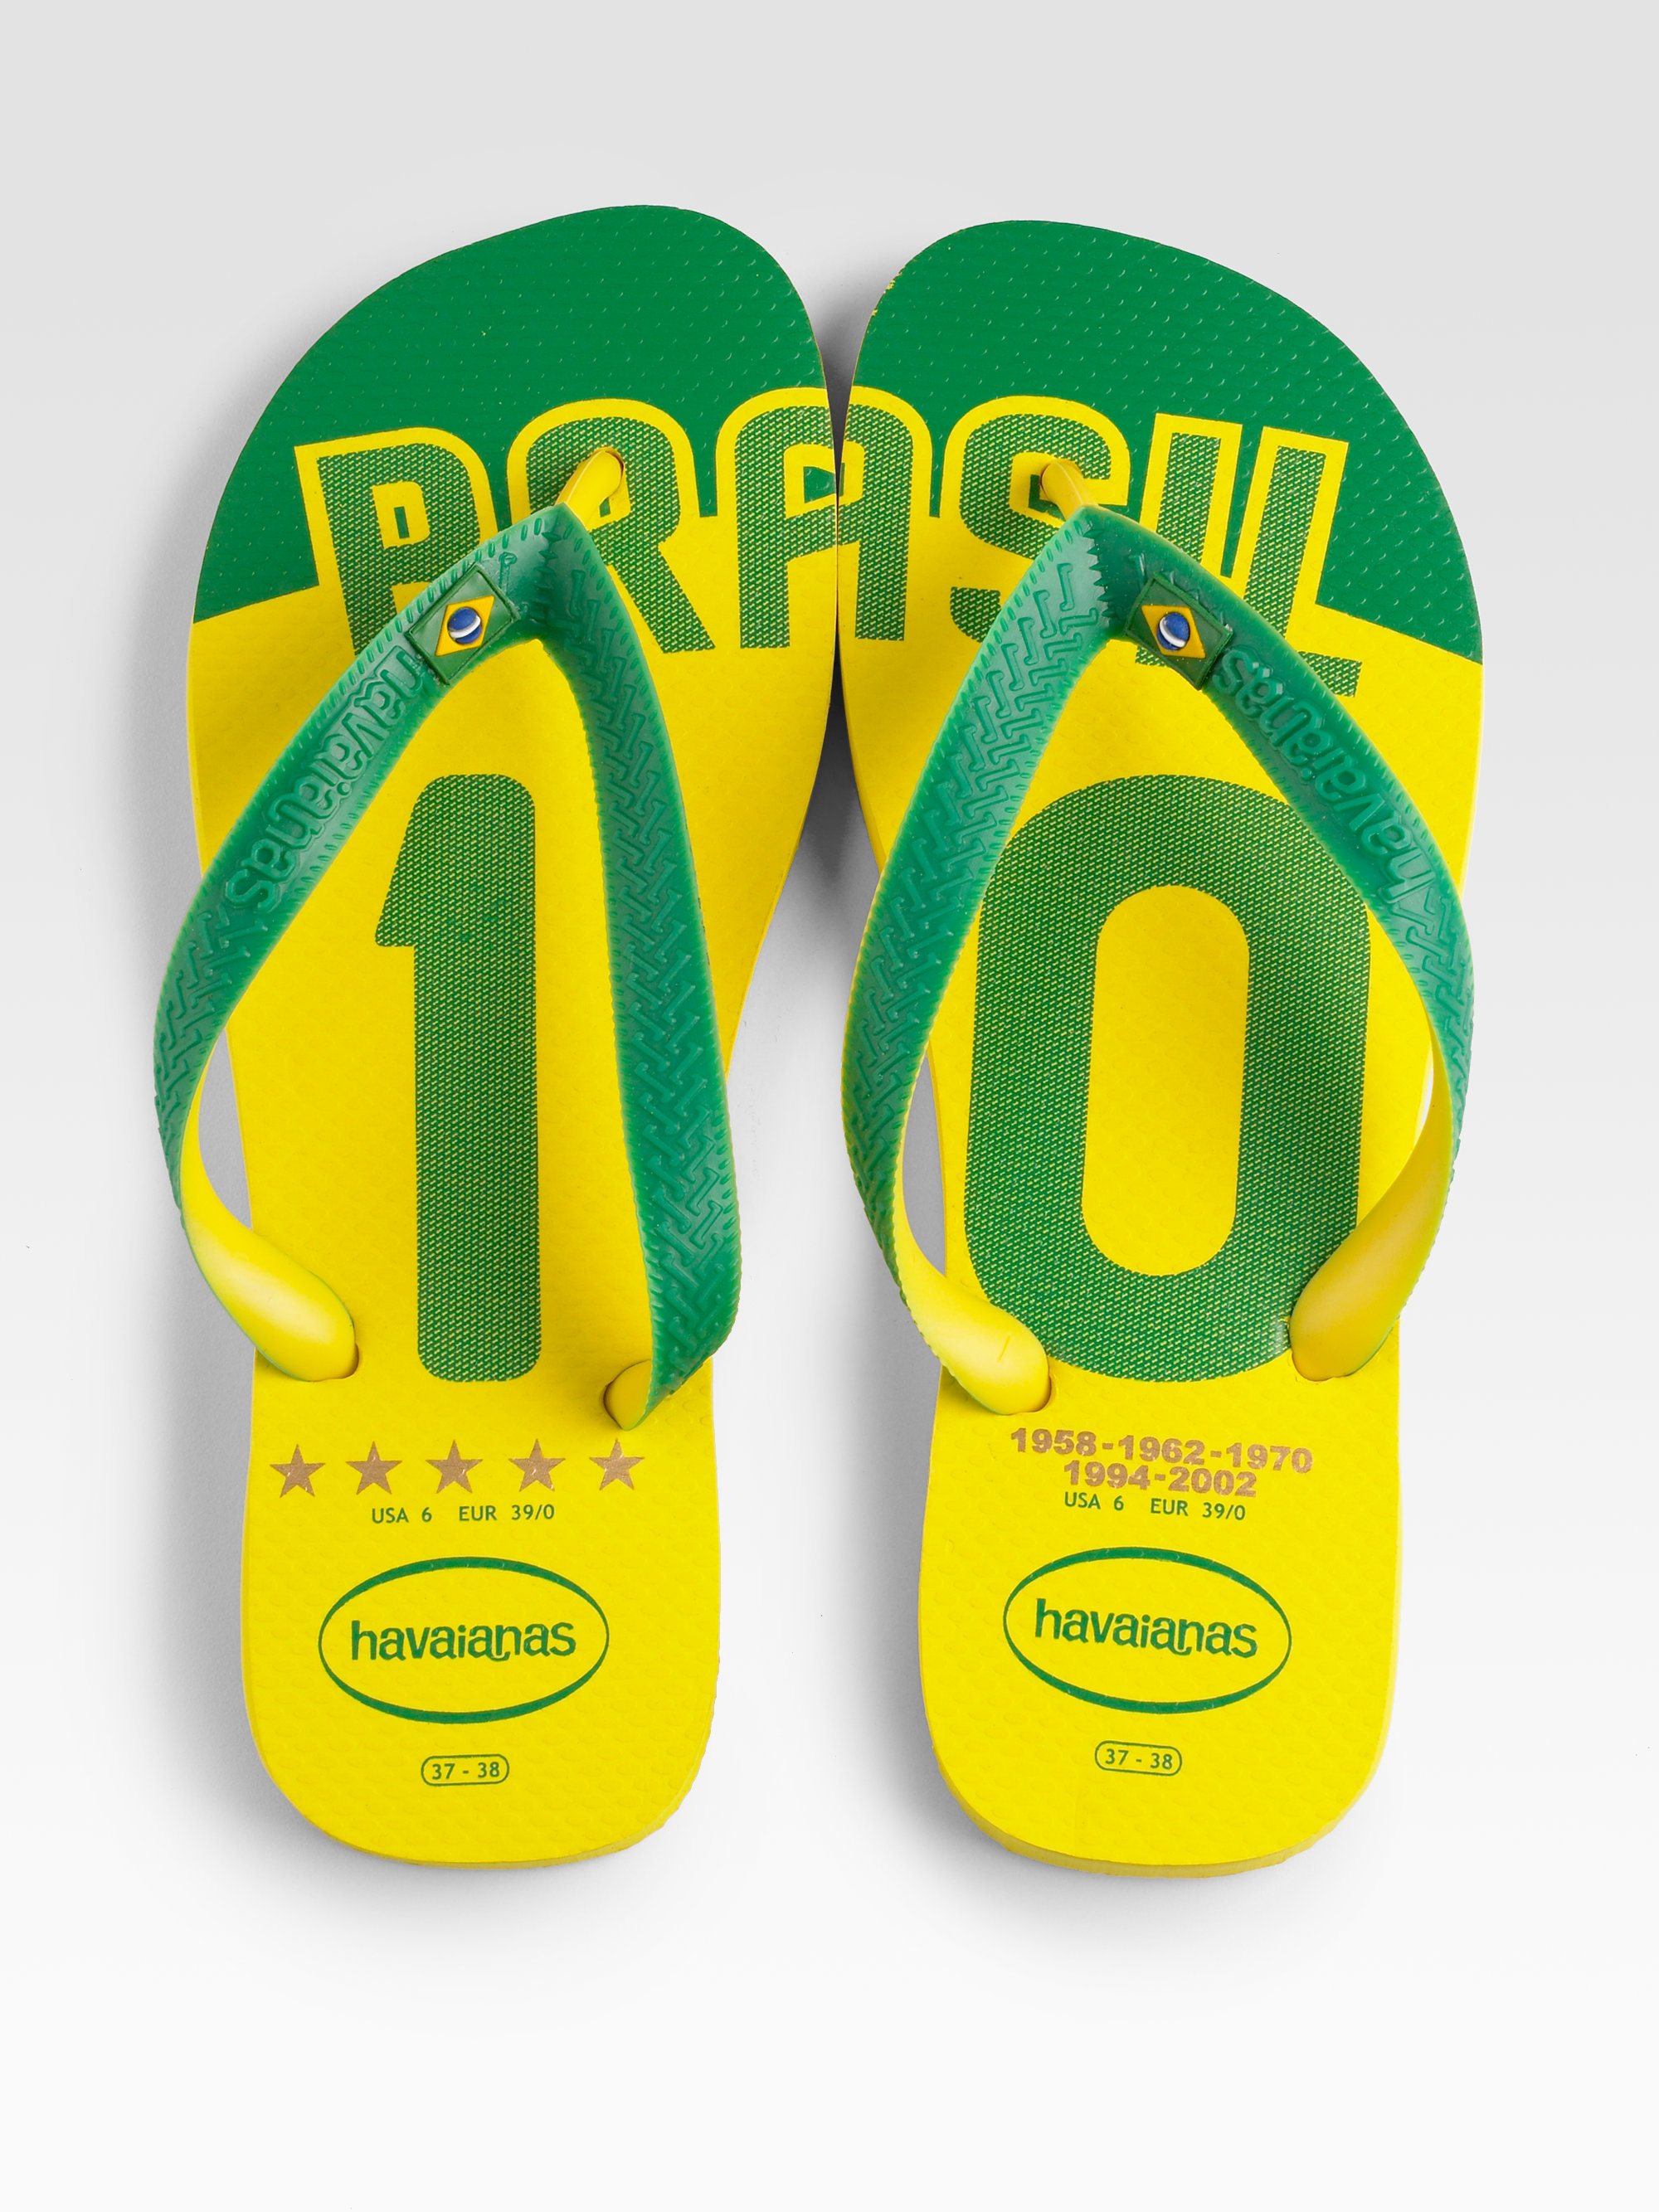 Lyst - Havaianas Team Brazil Flip Flops in Yellow for Men